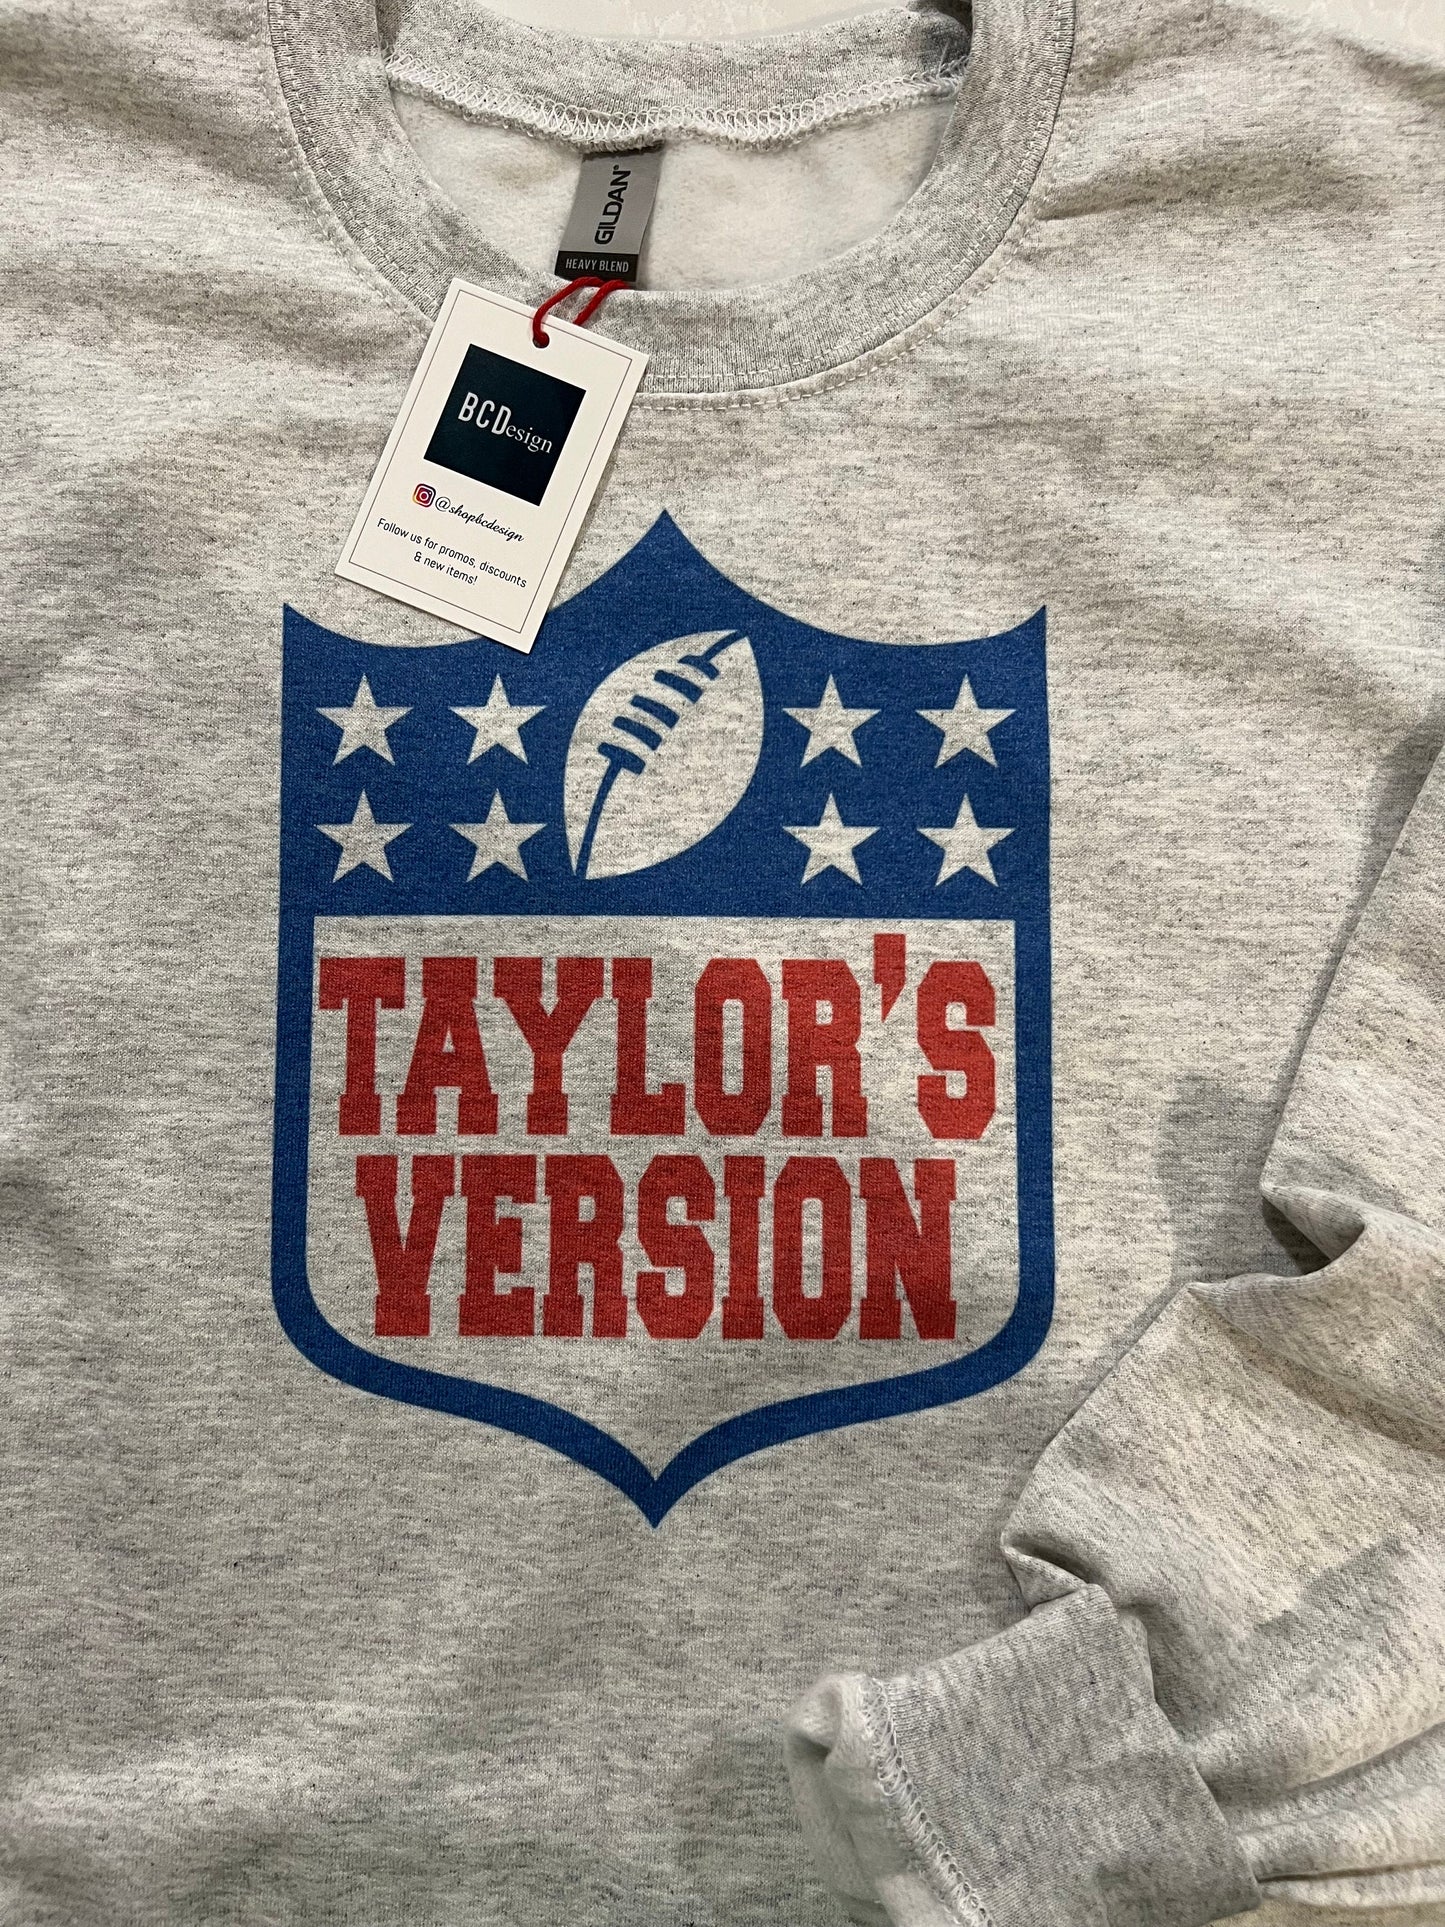 Taylor version Crewneck sweatshirt football sunday shirt for her